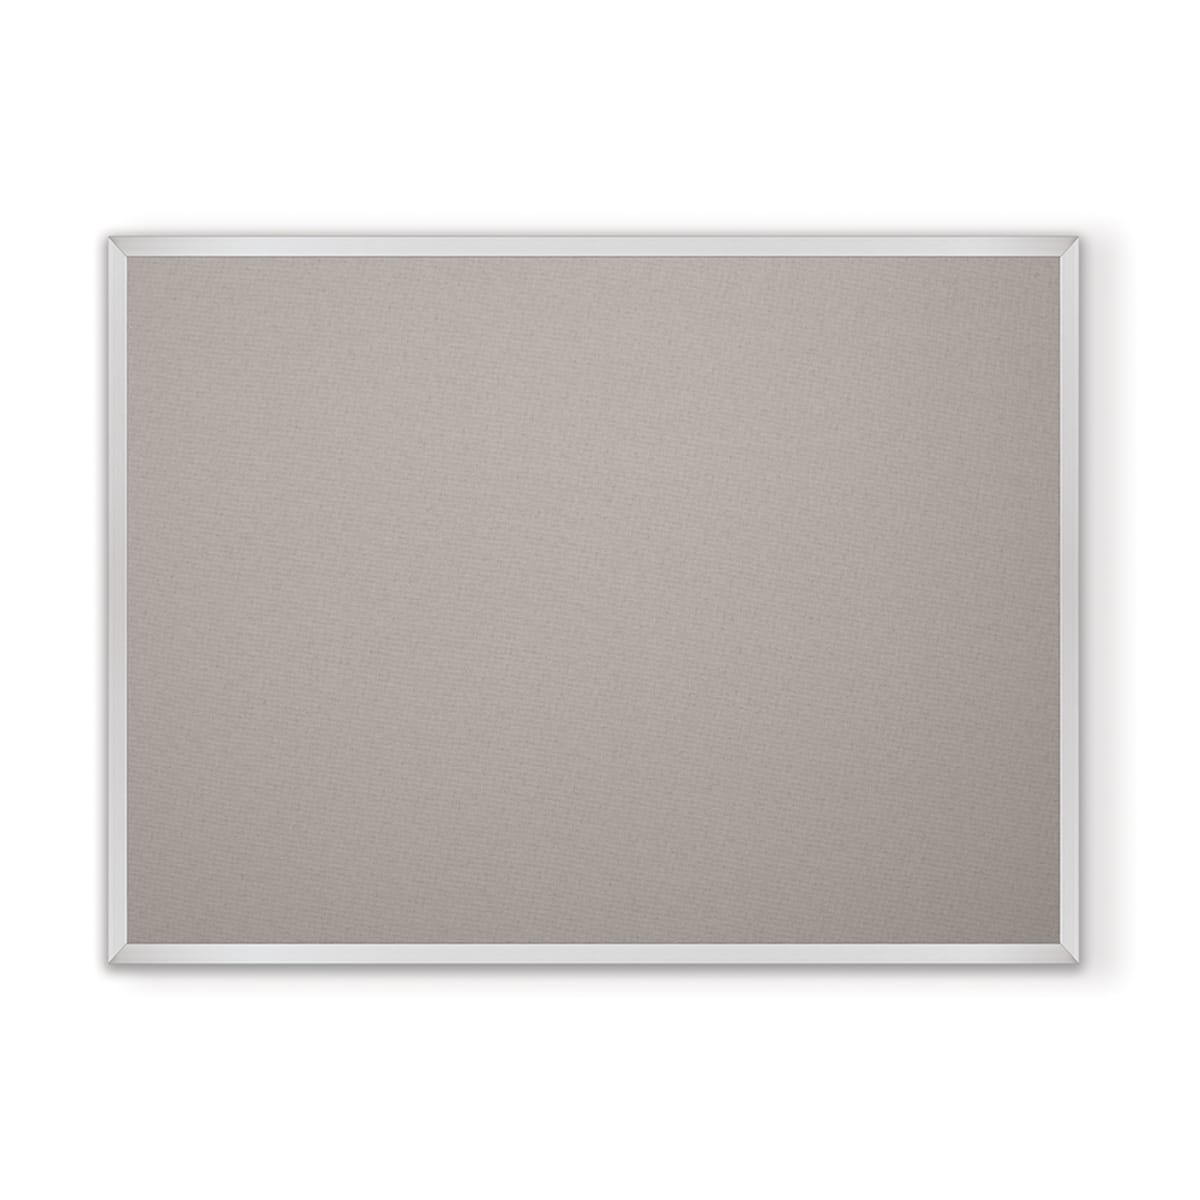 Mooreco Fabric Cork - Plate Tackboard - Aluminum Trim - 1.5'H x 2'W (Mooreco 333AA) - SchoolOutlet